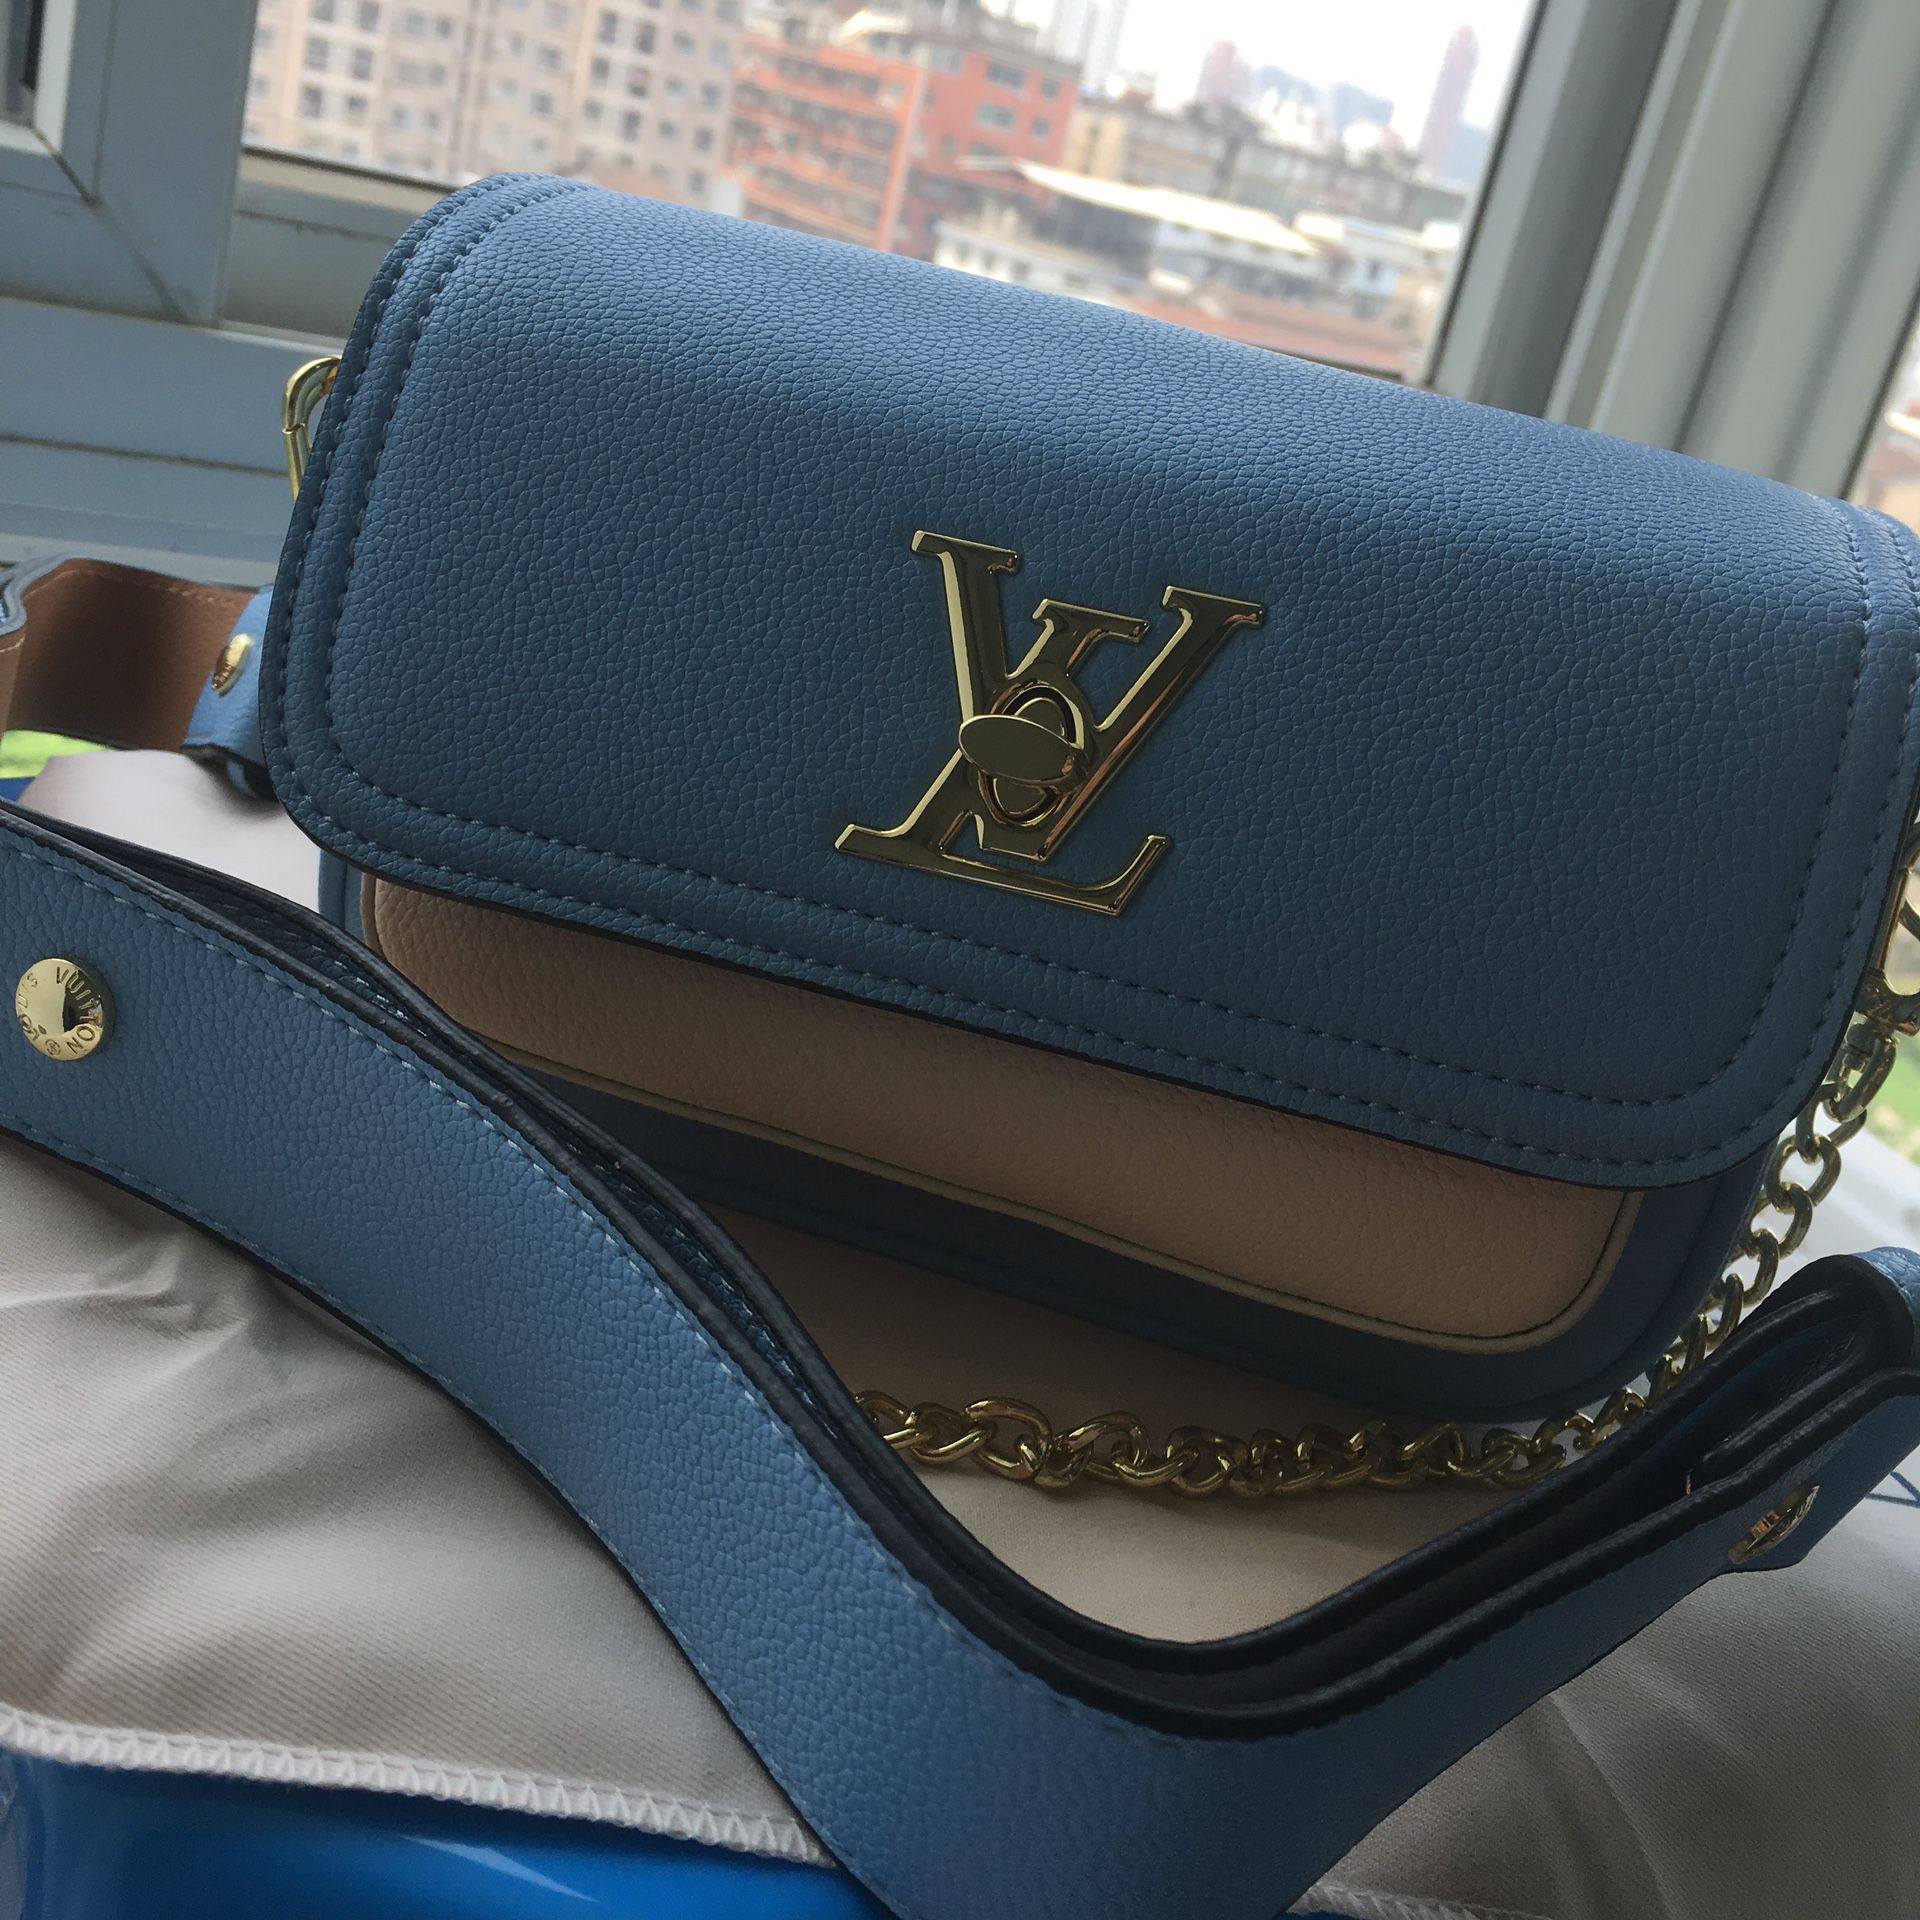 Louis Vuitton - Authenticated Handbag - Leather Blue for Women, Good Condition